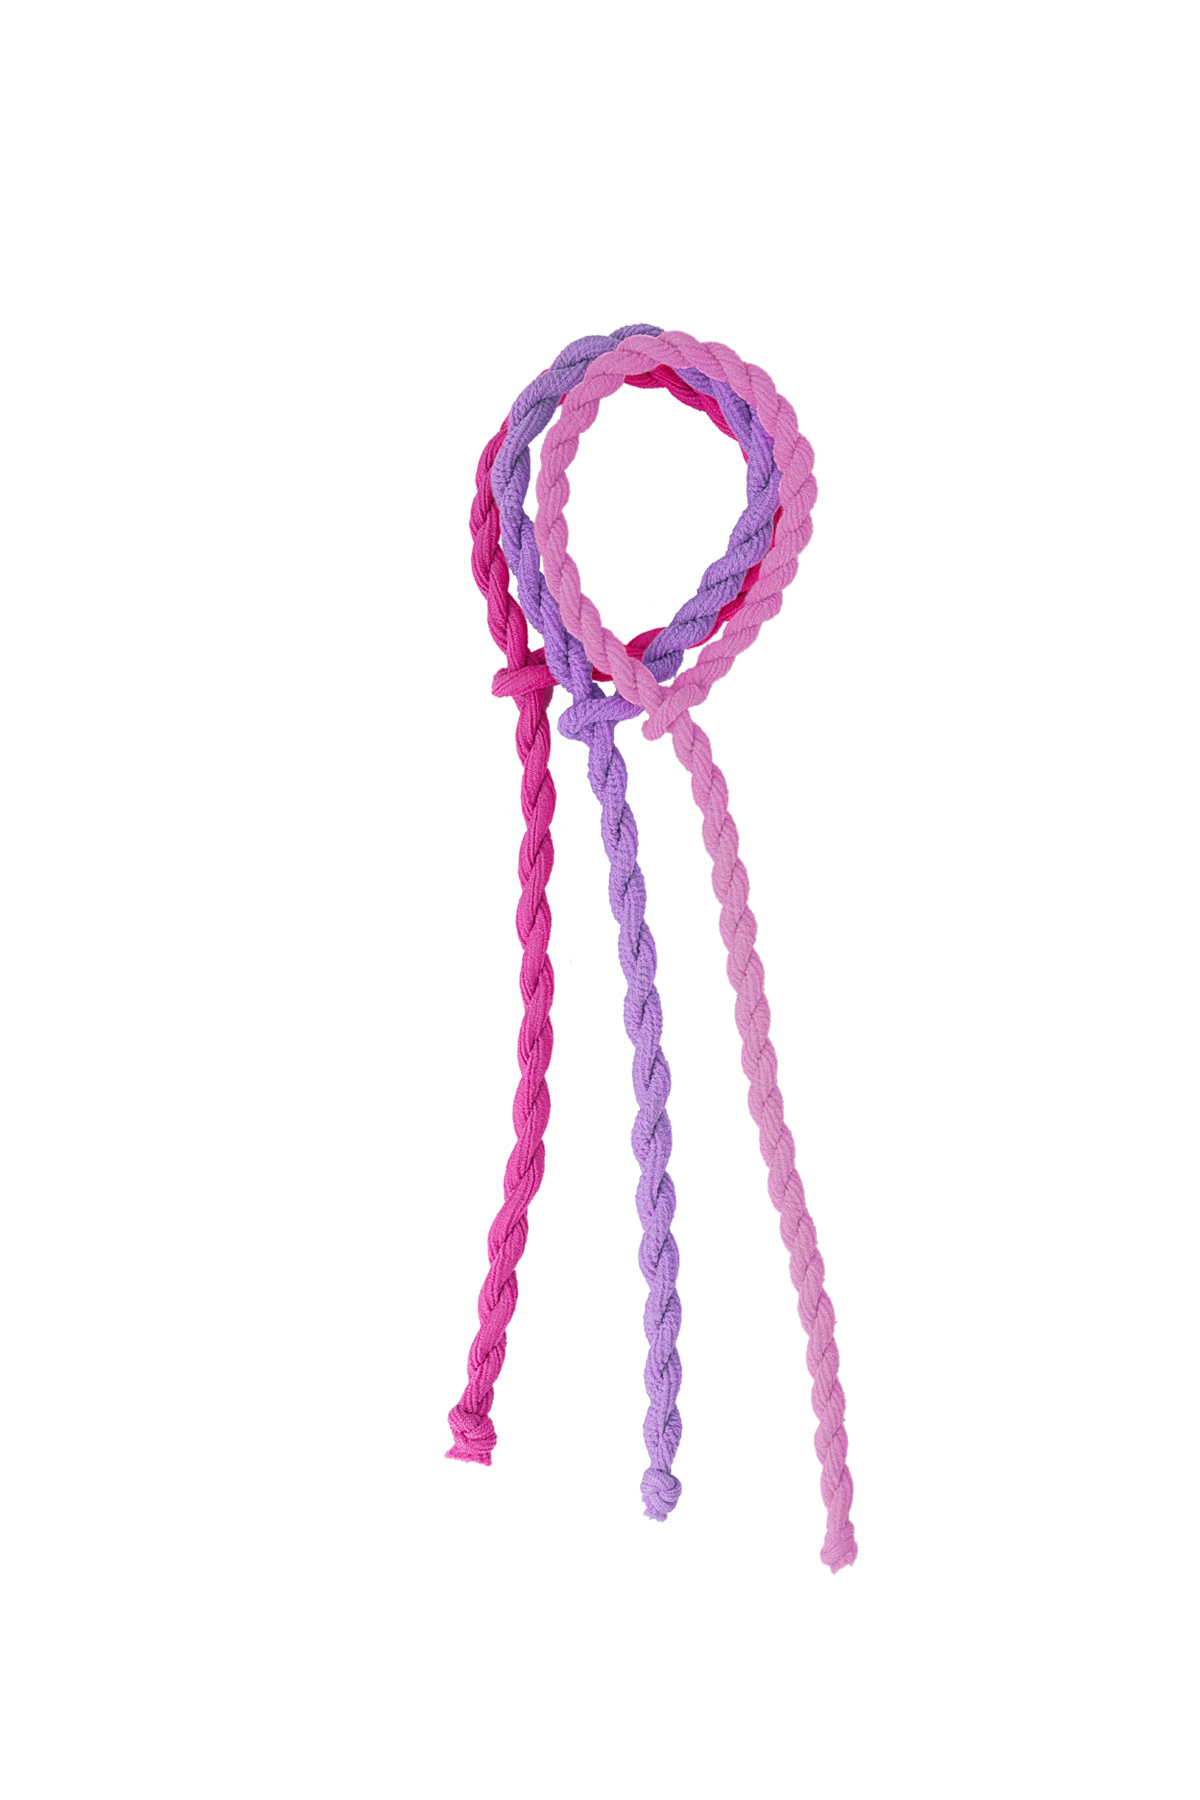 Twisted hair elastic - purple h5 